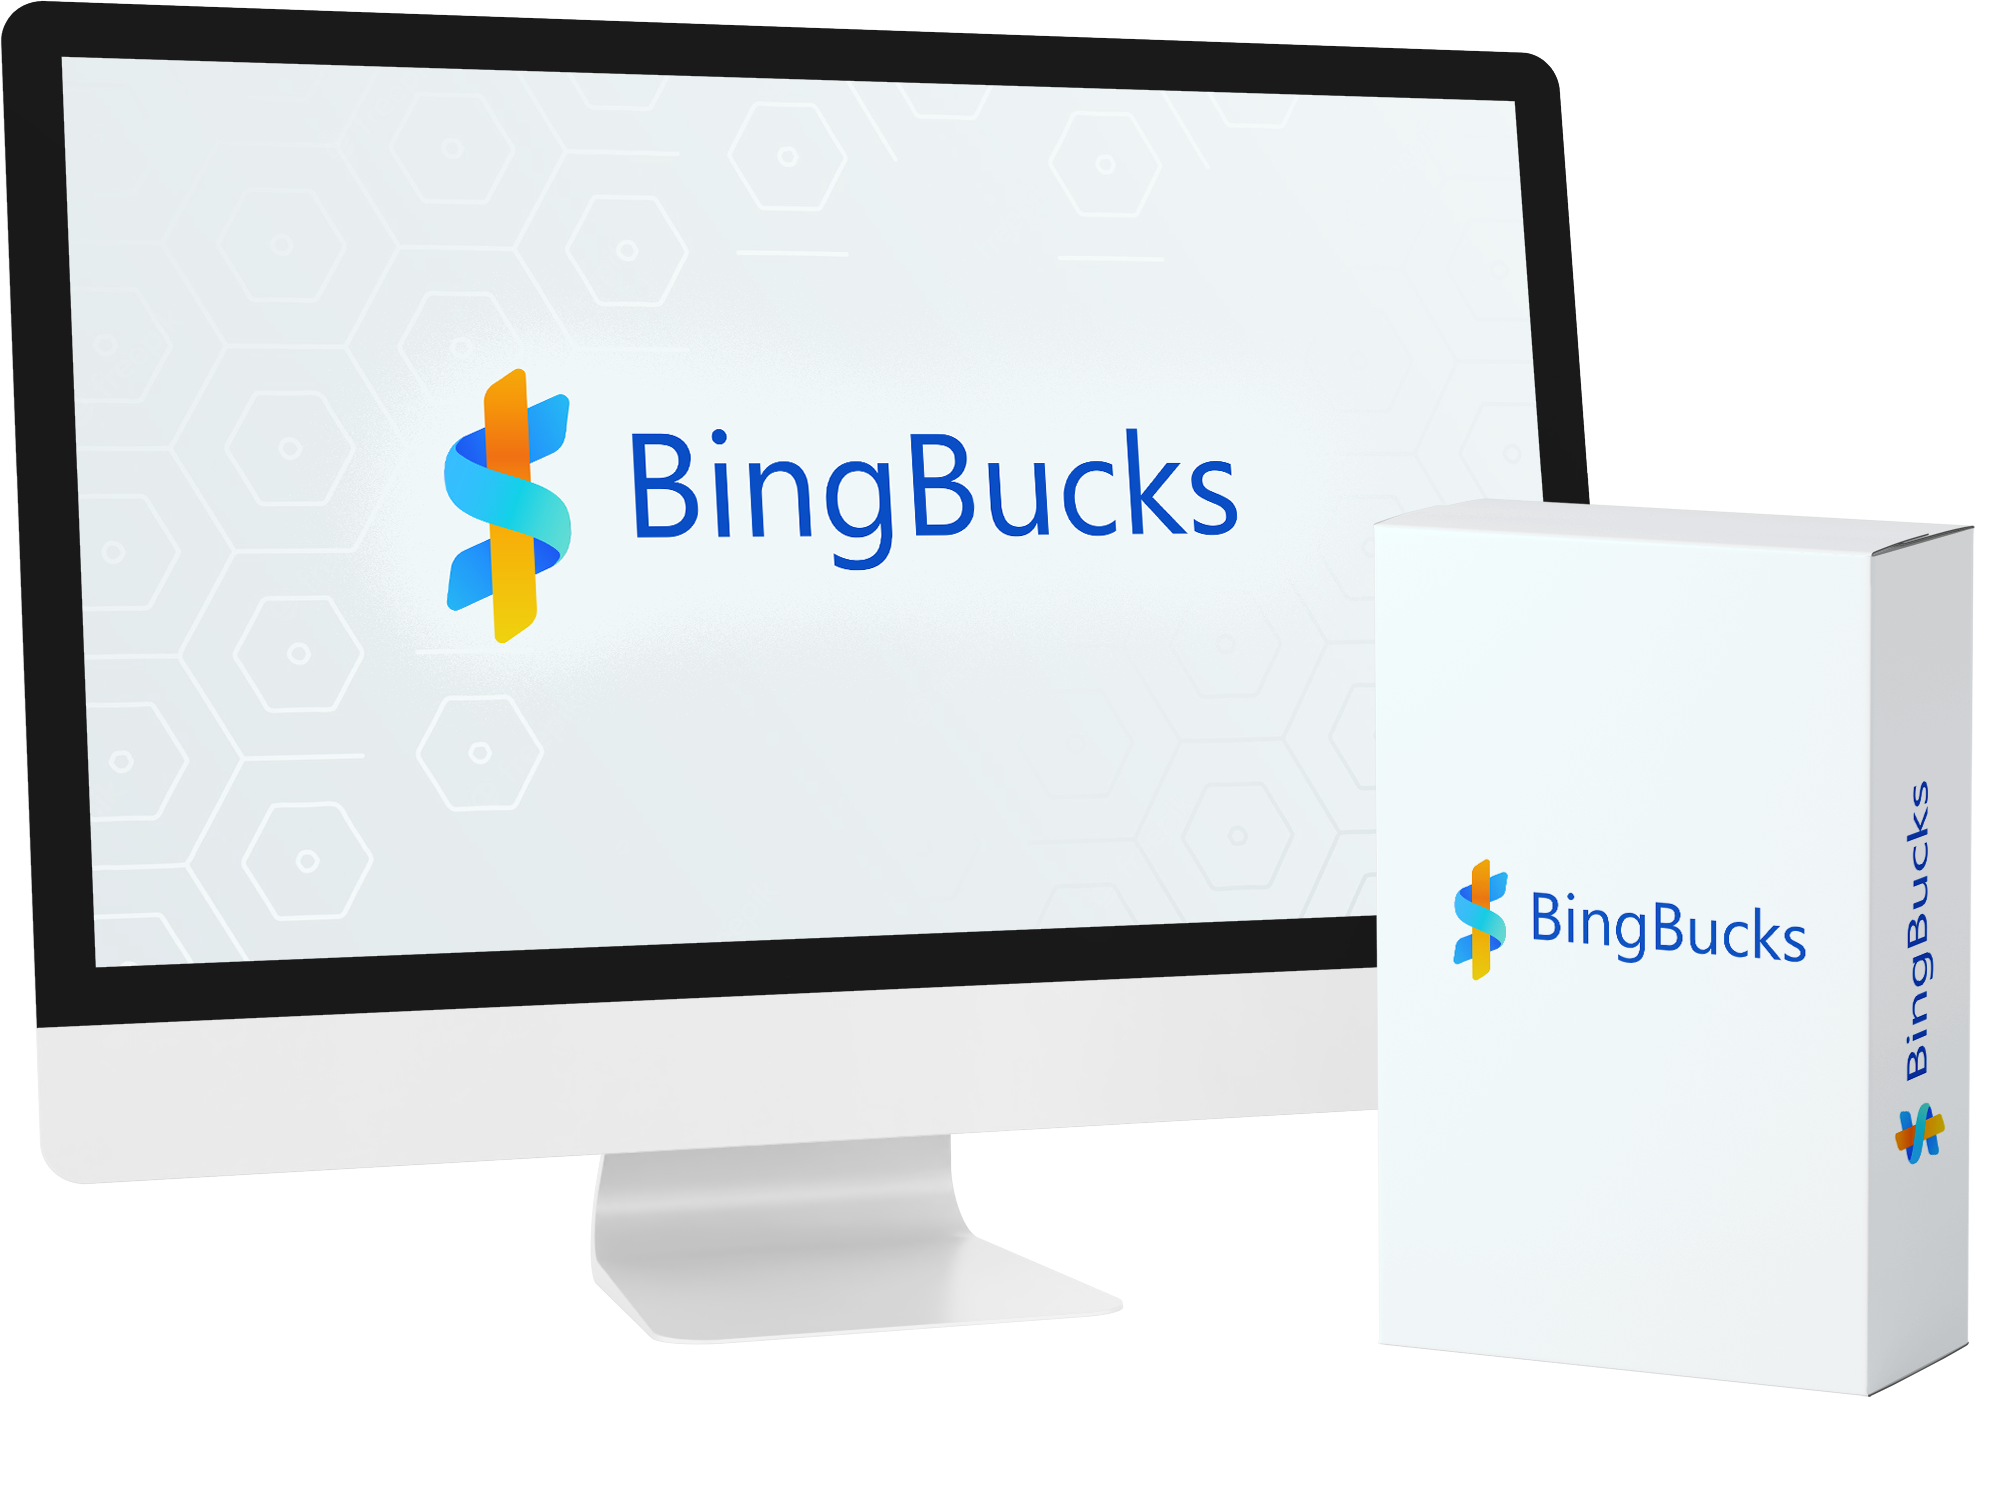 BingBucks